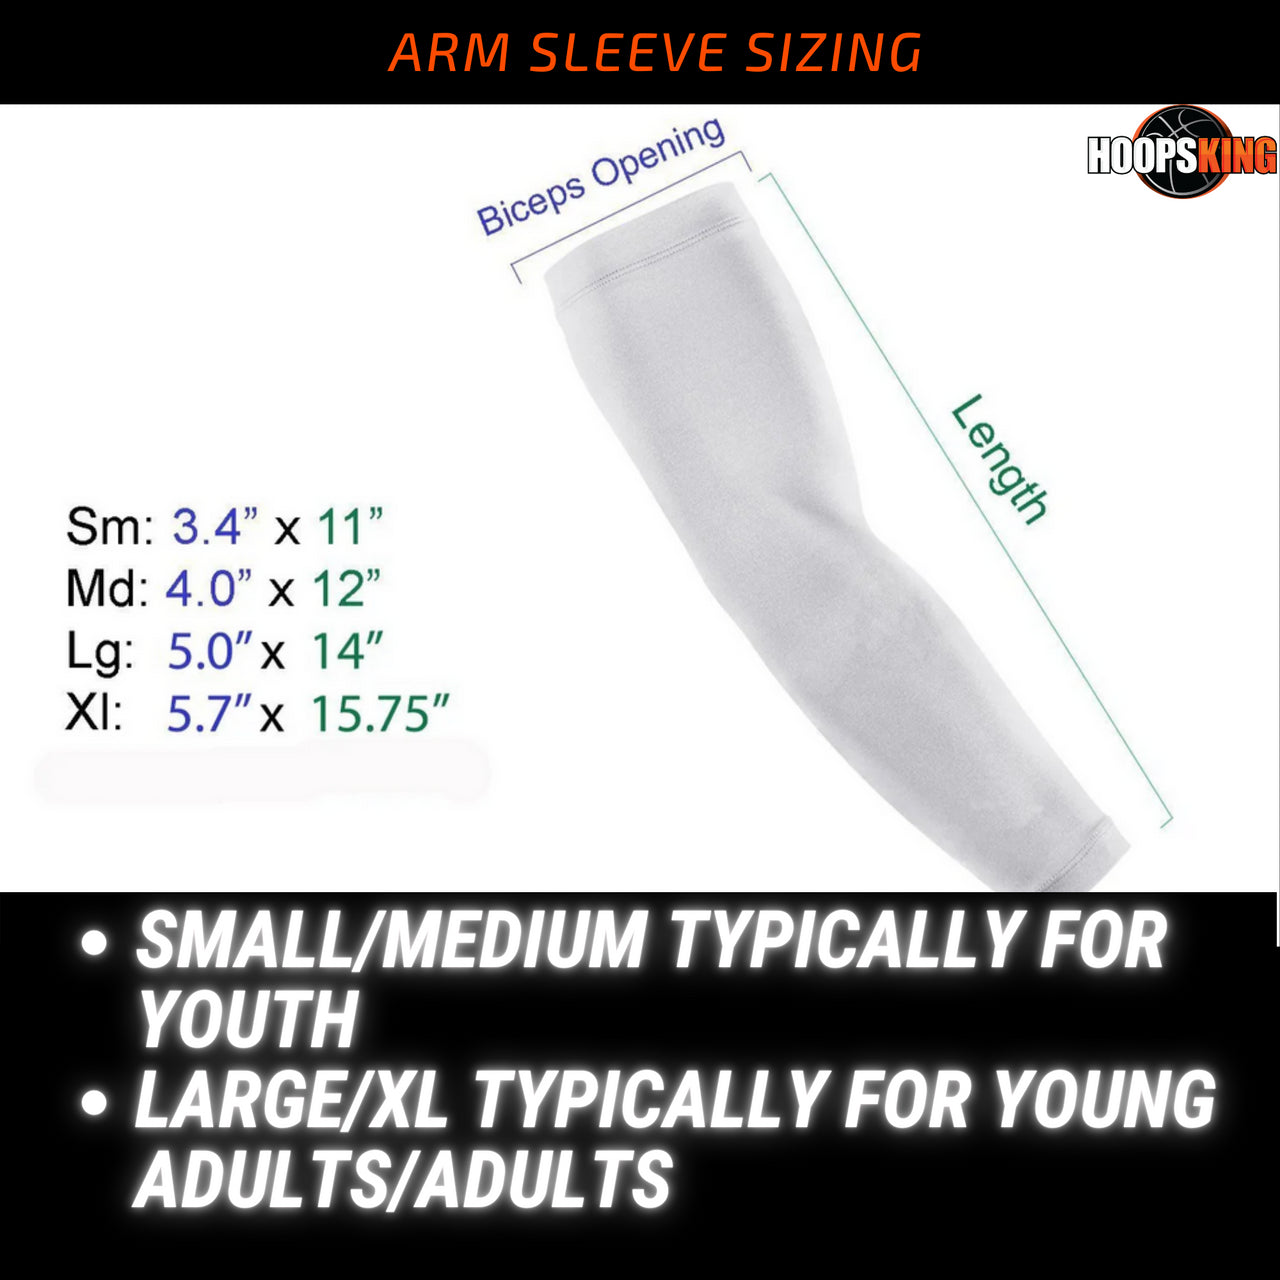 Mangas de brazo personalizadas